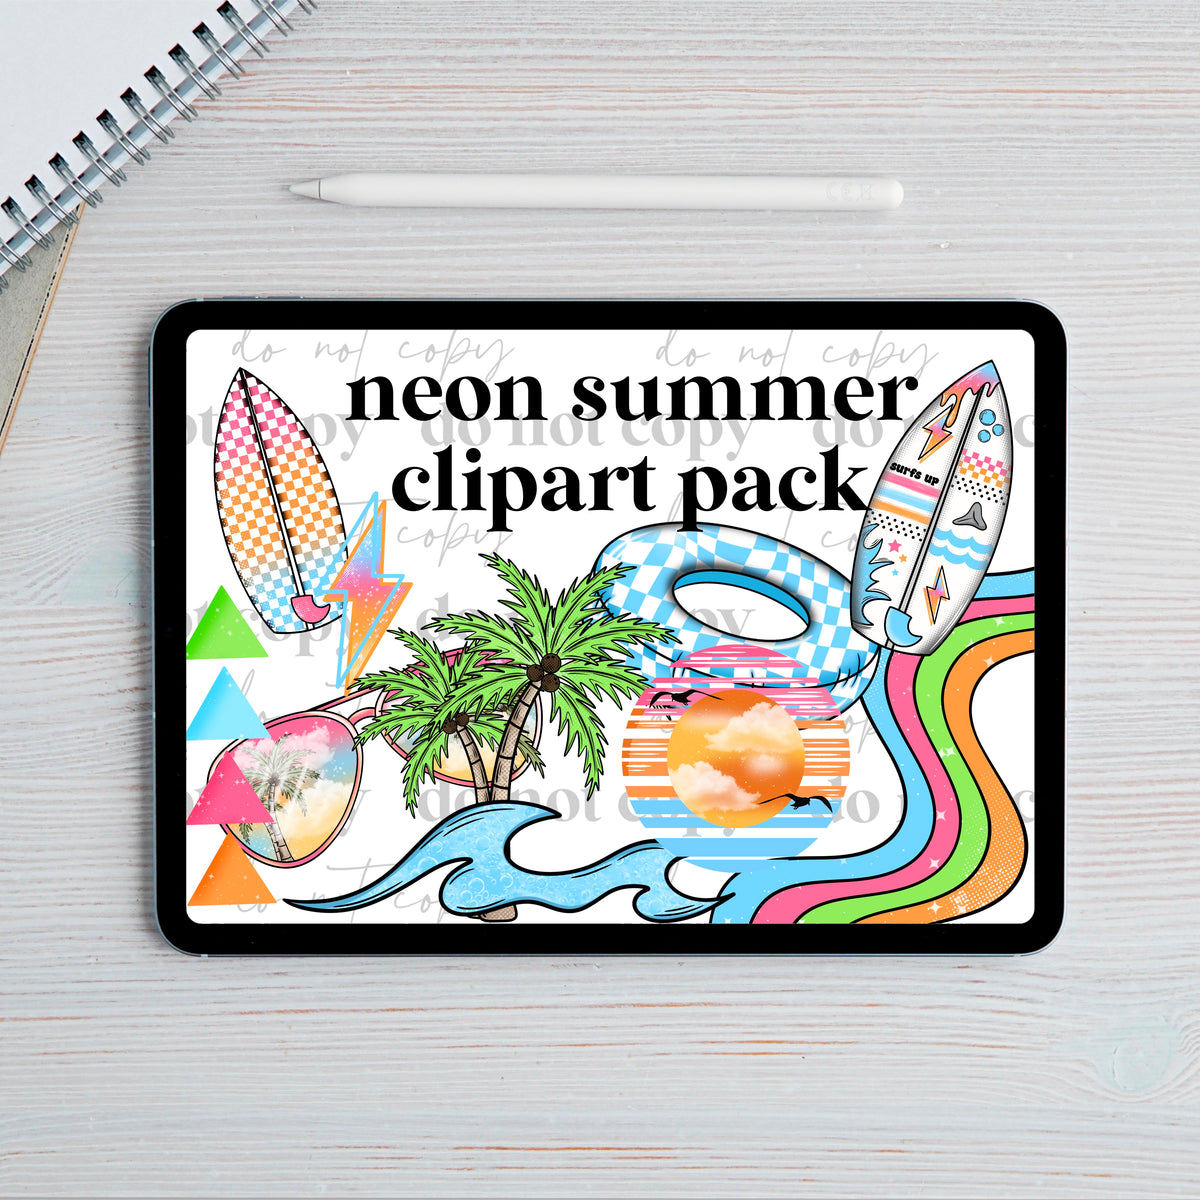 Neon summer clipart